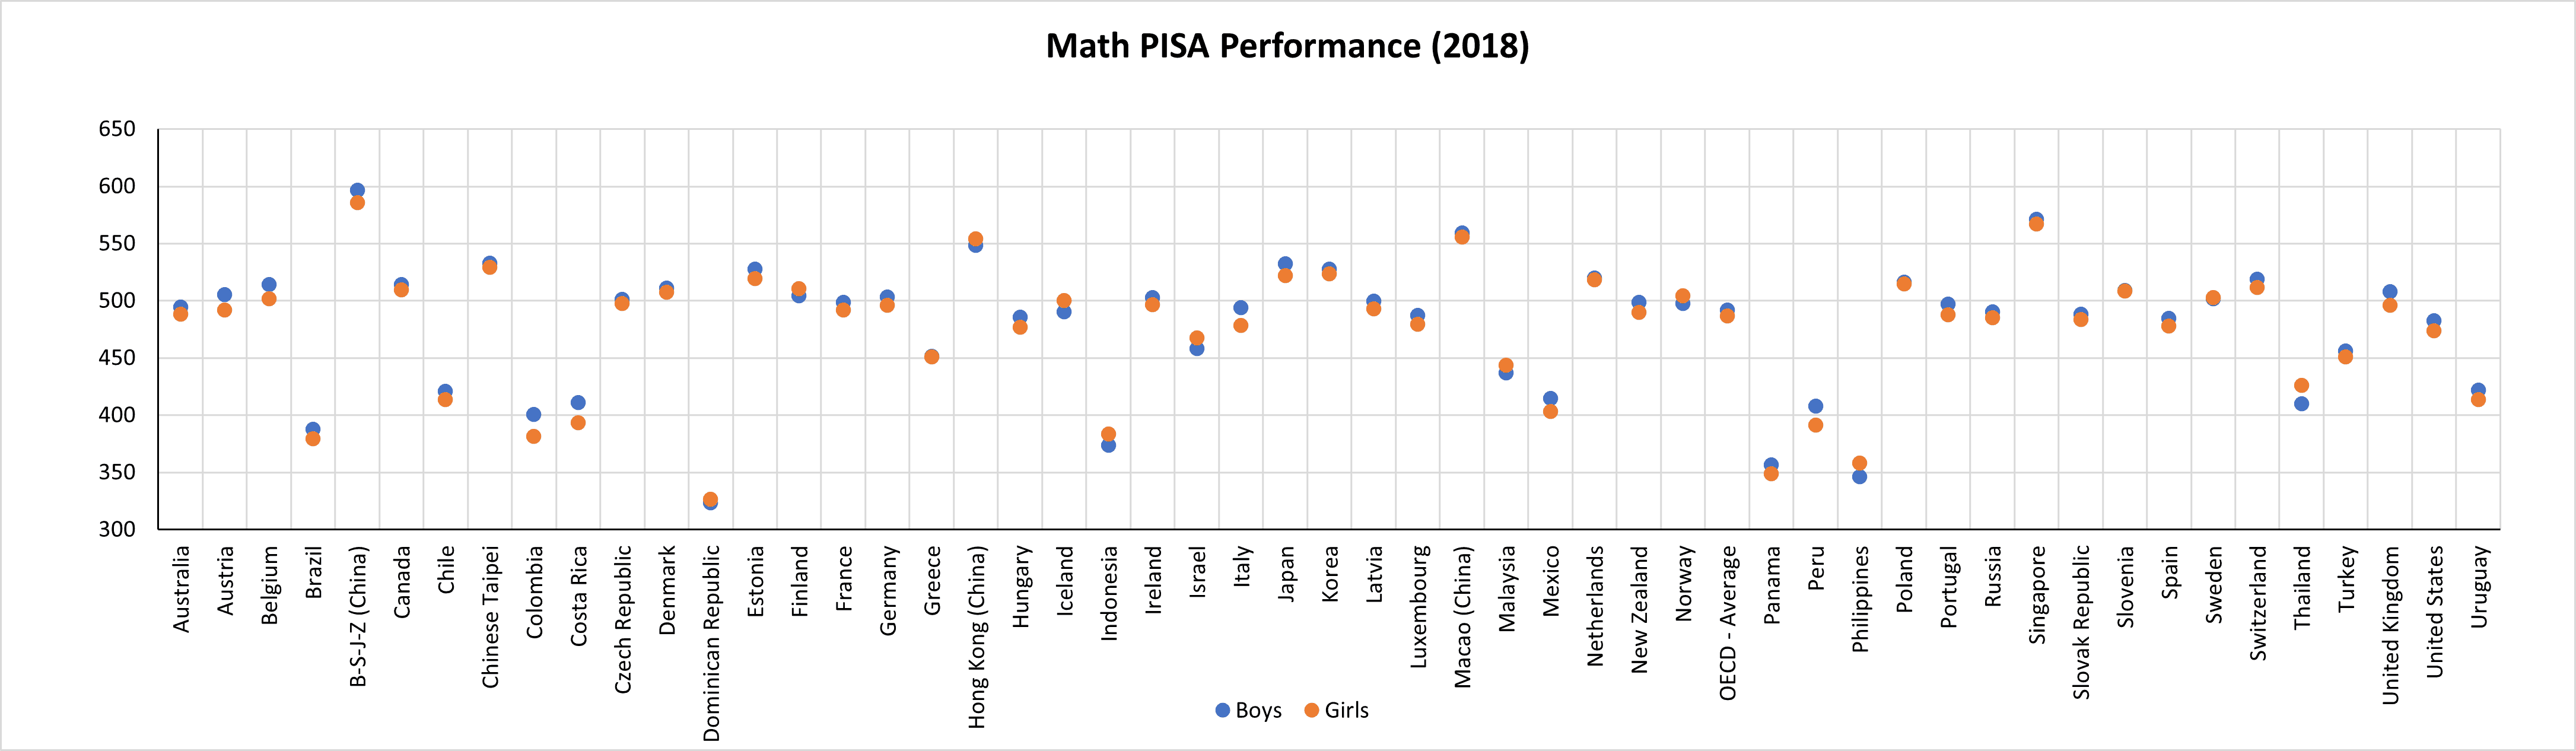 PISA math performance